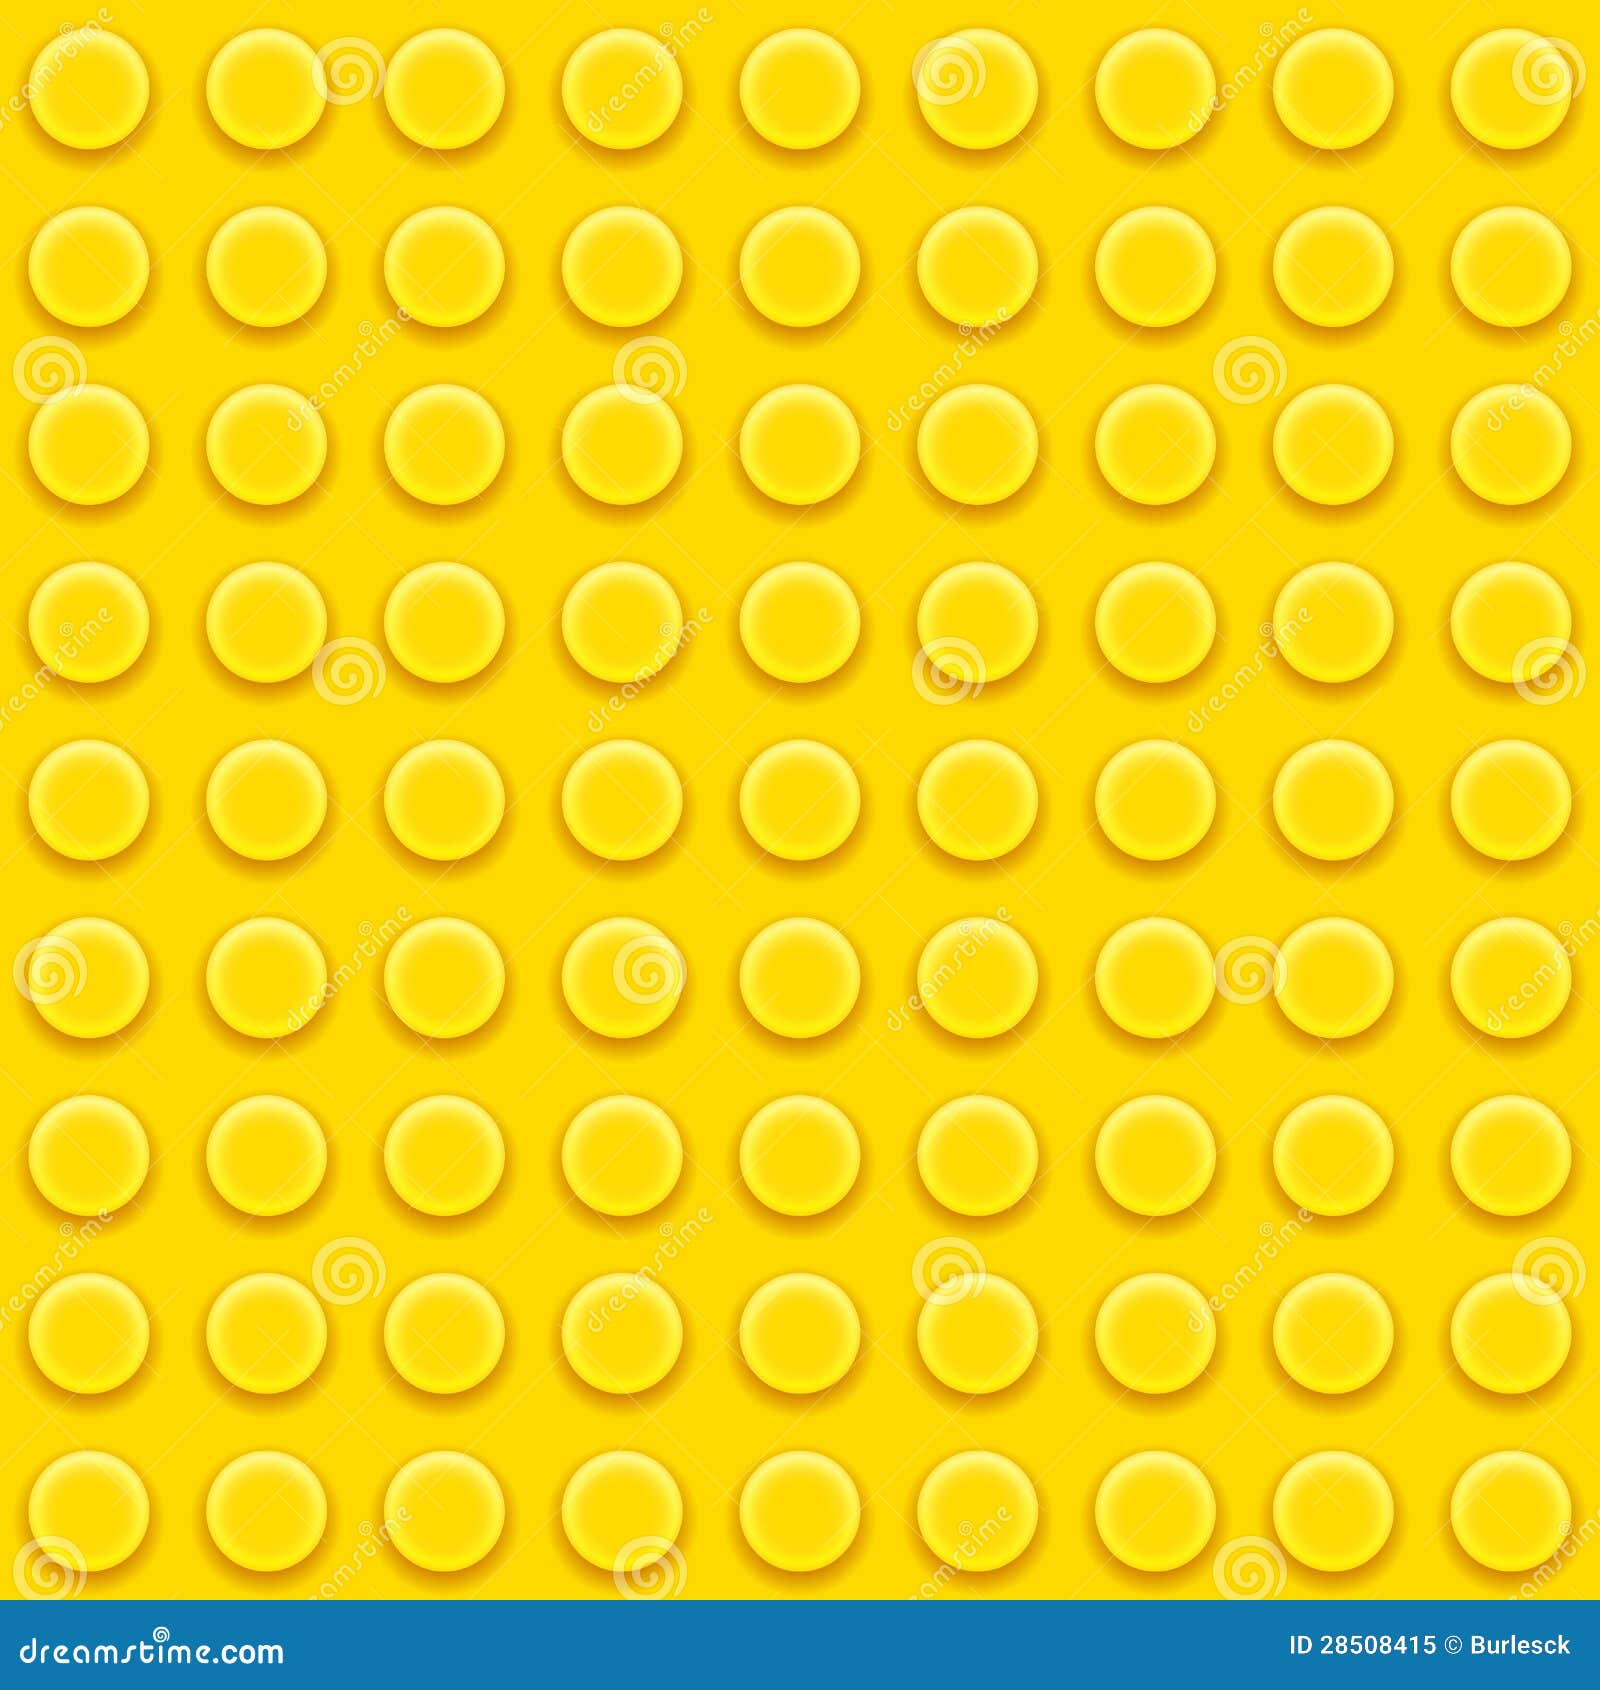 lego blocks pattern